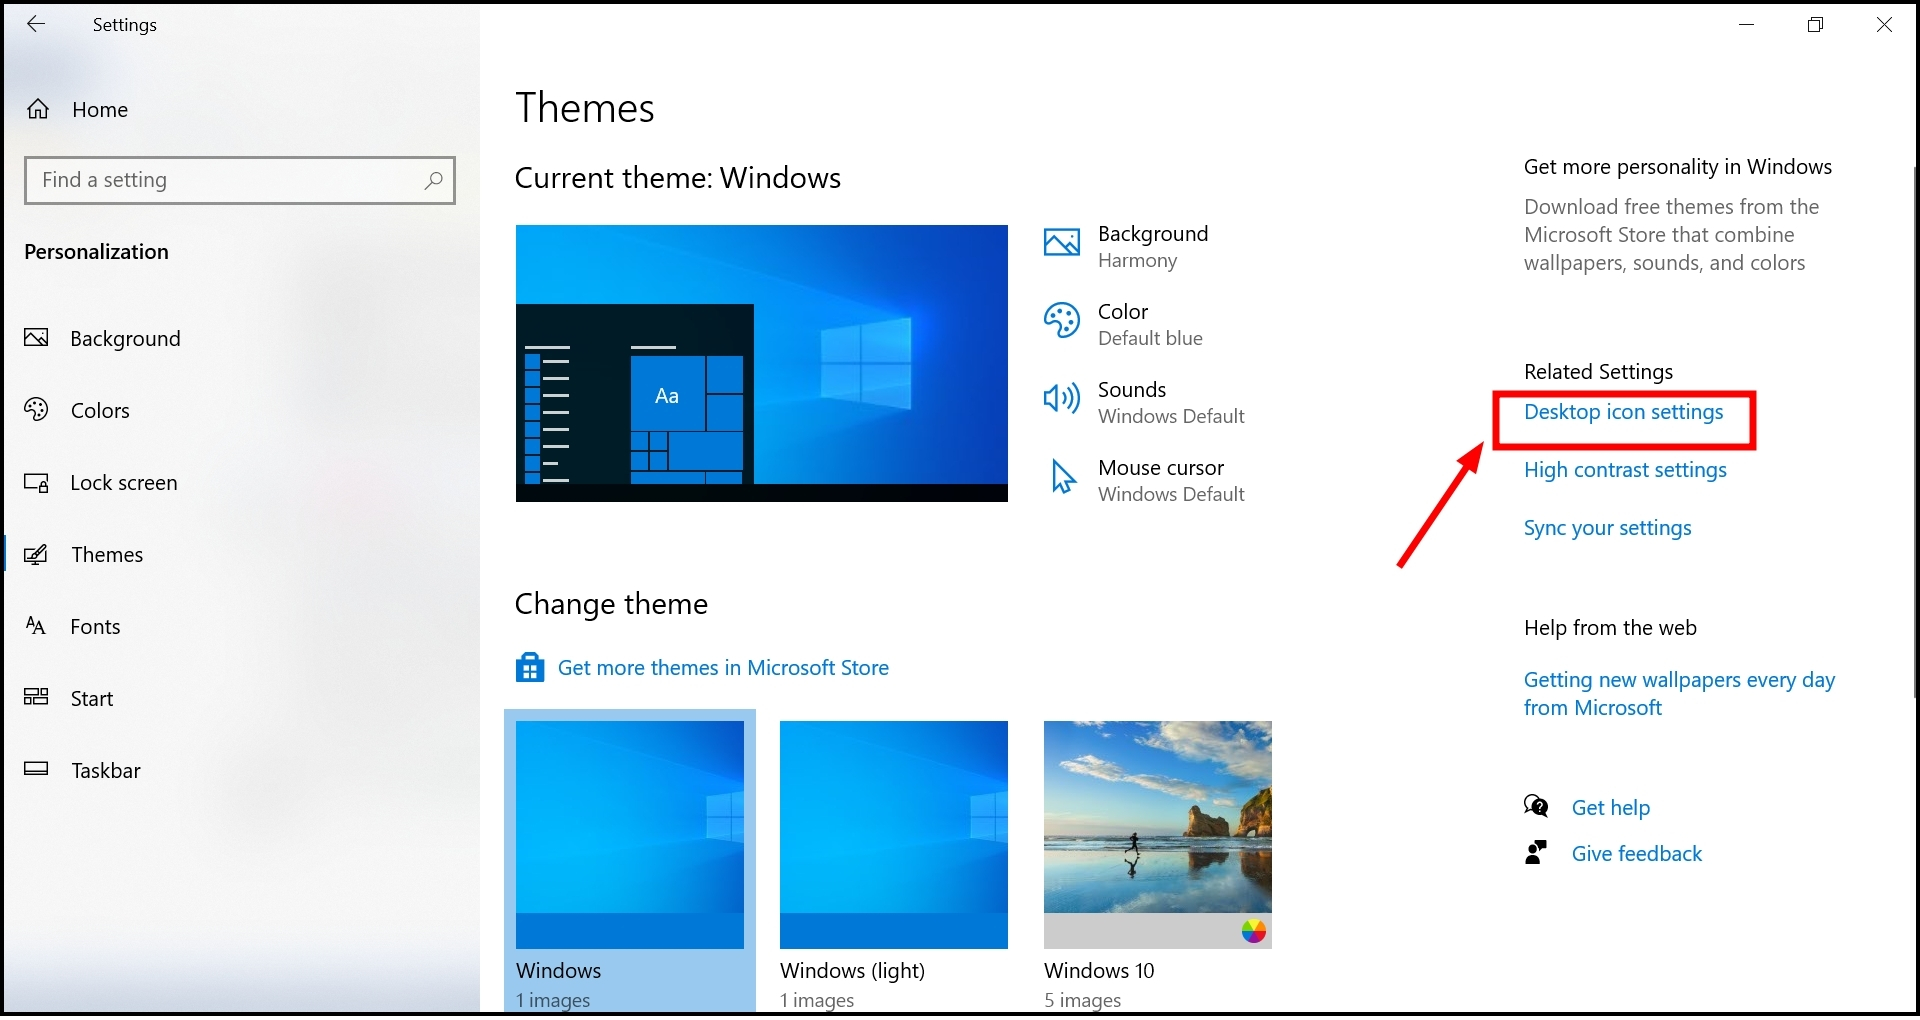 Click on Desktop icon settings